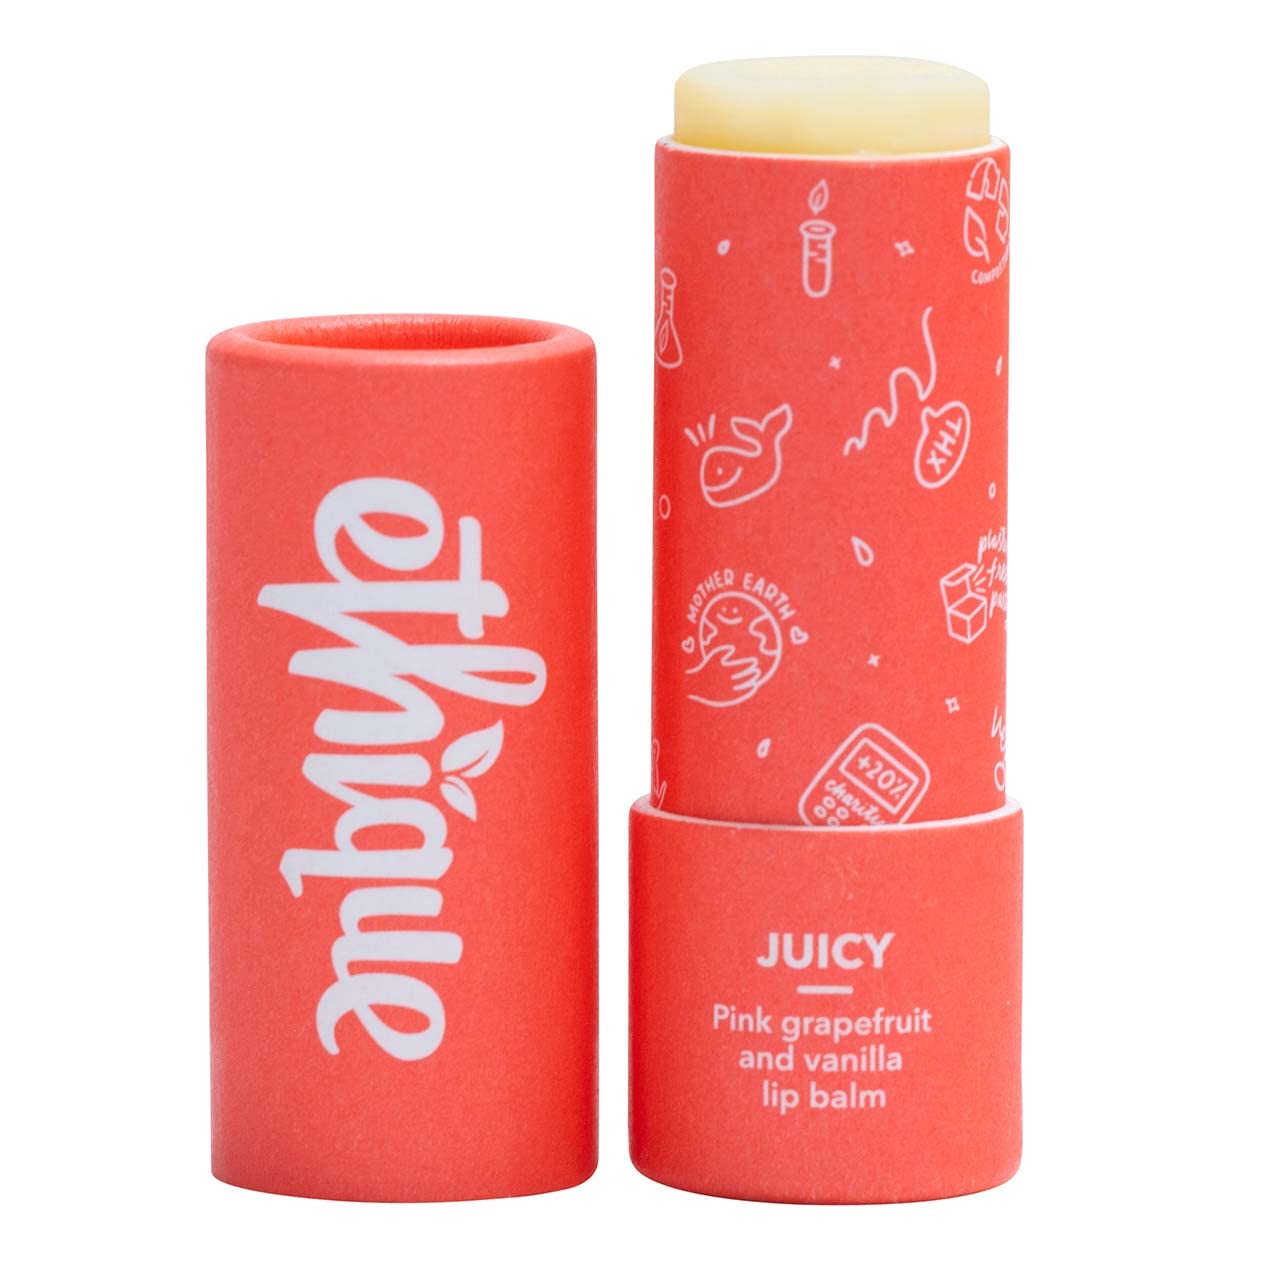 Ethique Juicy Nourishing Lip Balm - Plastic-Free, Vegan, Cruelty-Free, Eco-Friendly, 0.32 oz (Pack of 1)